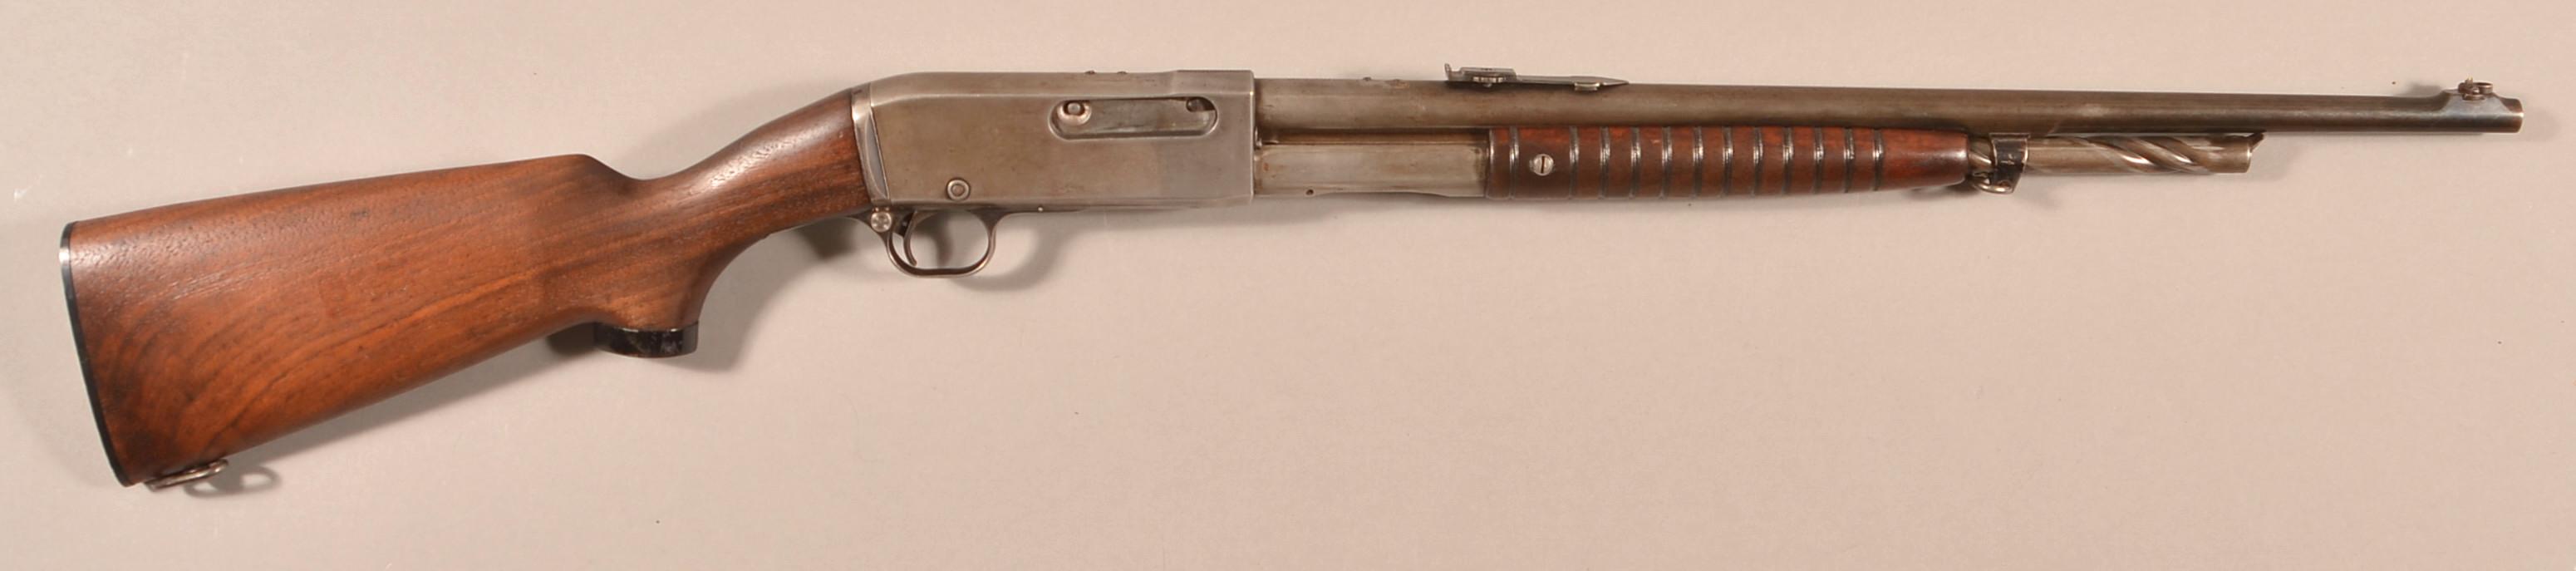 Remington model 141 .35 Rem. slide action rifle